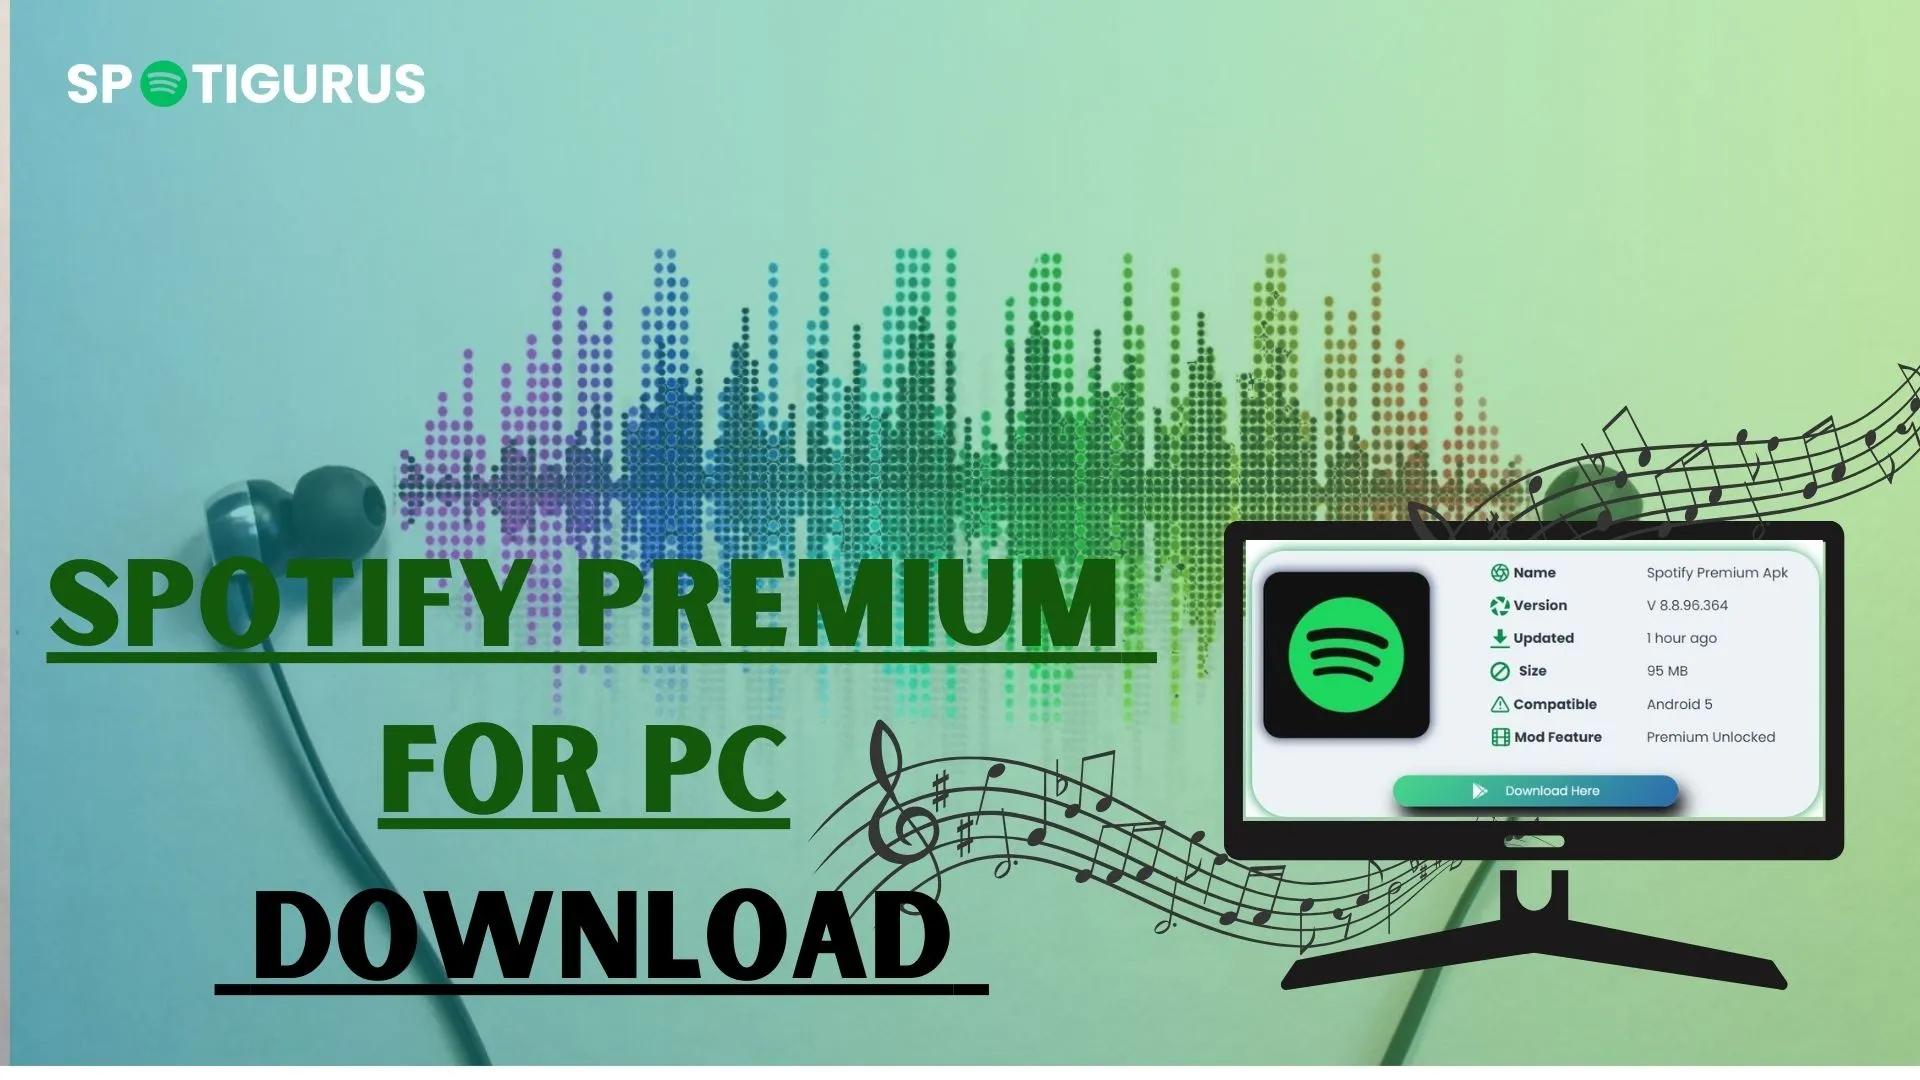 Spotify premium APK pc download feature image